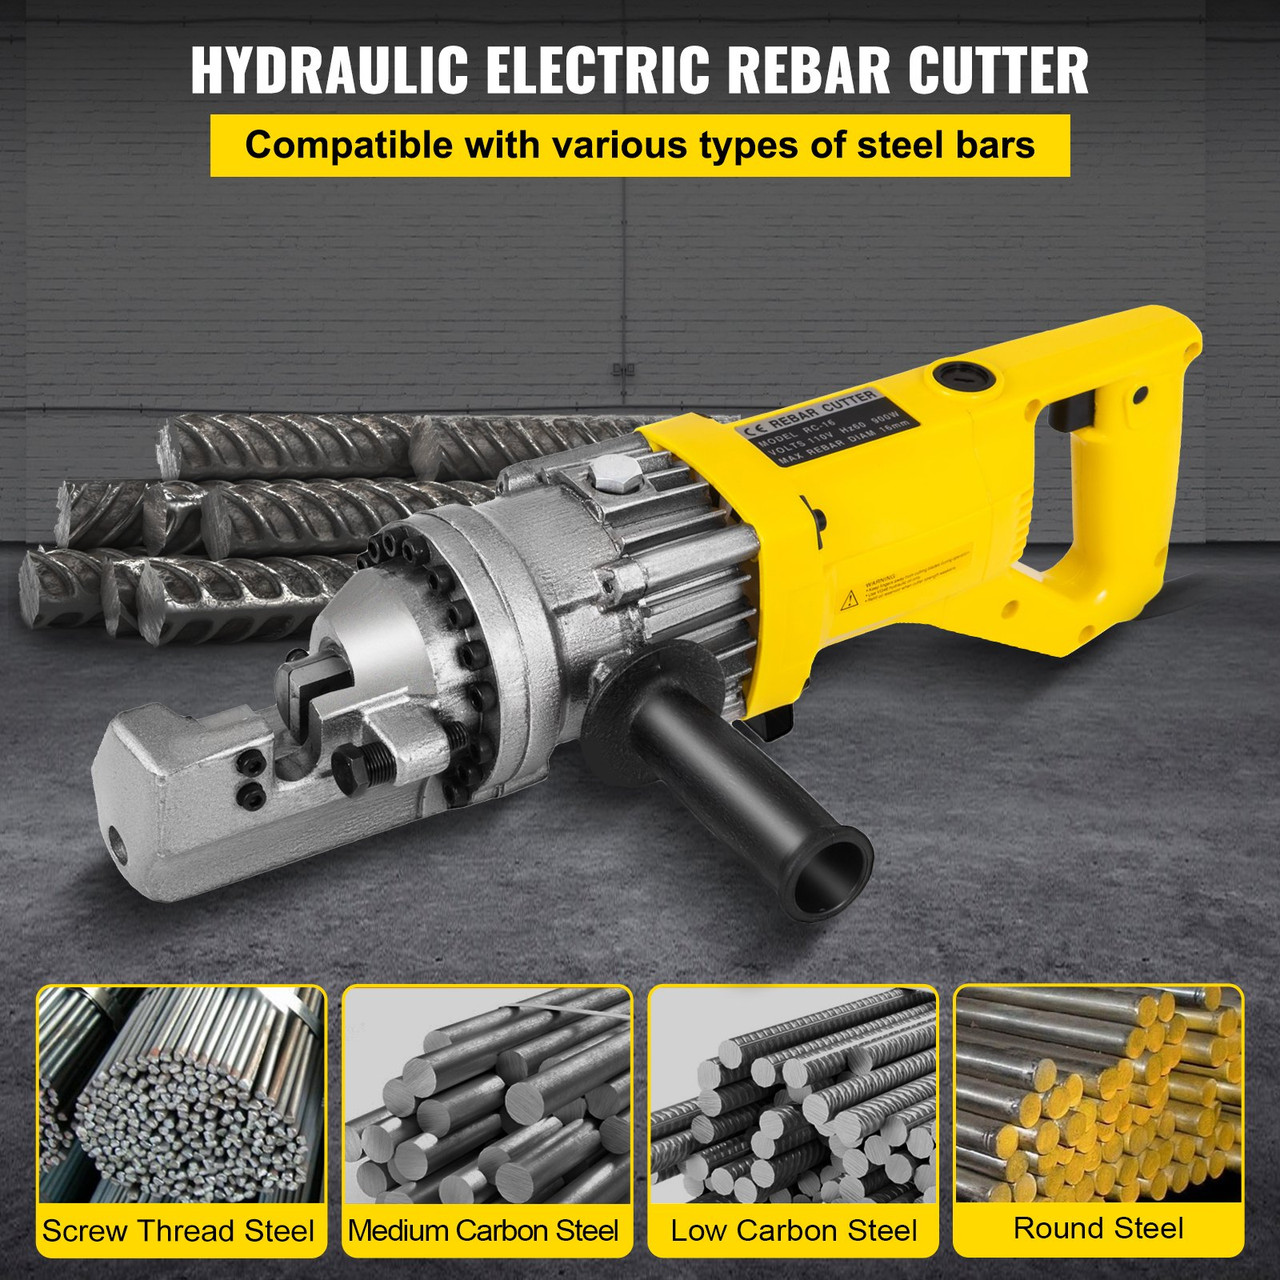 Electric Hydraulic Rebar Cutter, 900W Portable Electric Rebar Cut 5/8" 16mm #5 Rebar within 3 Seconds, 110V